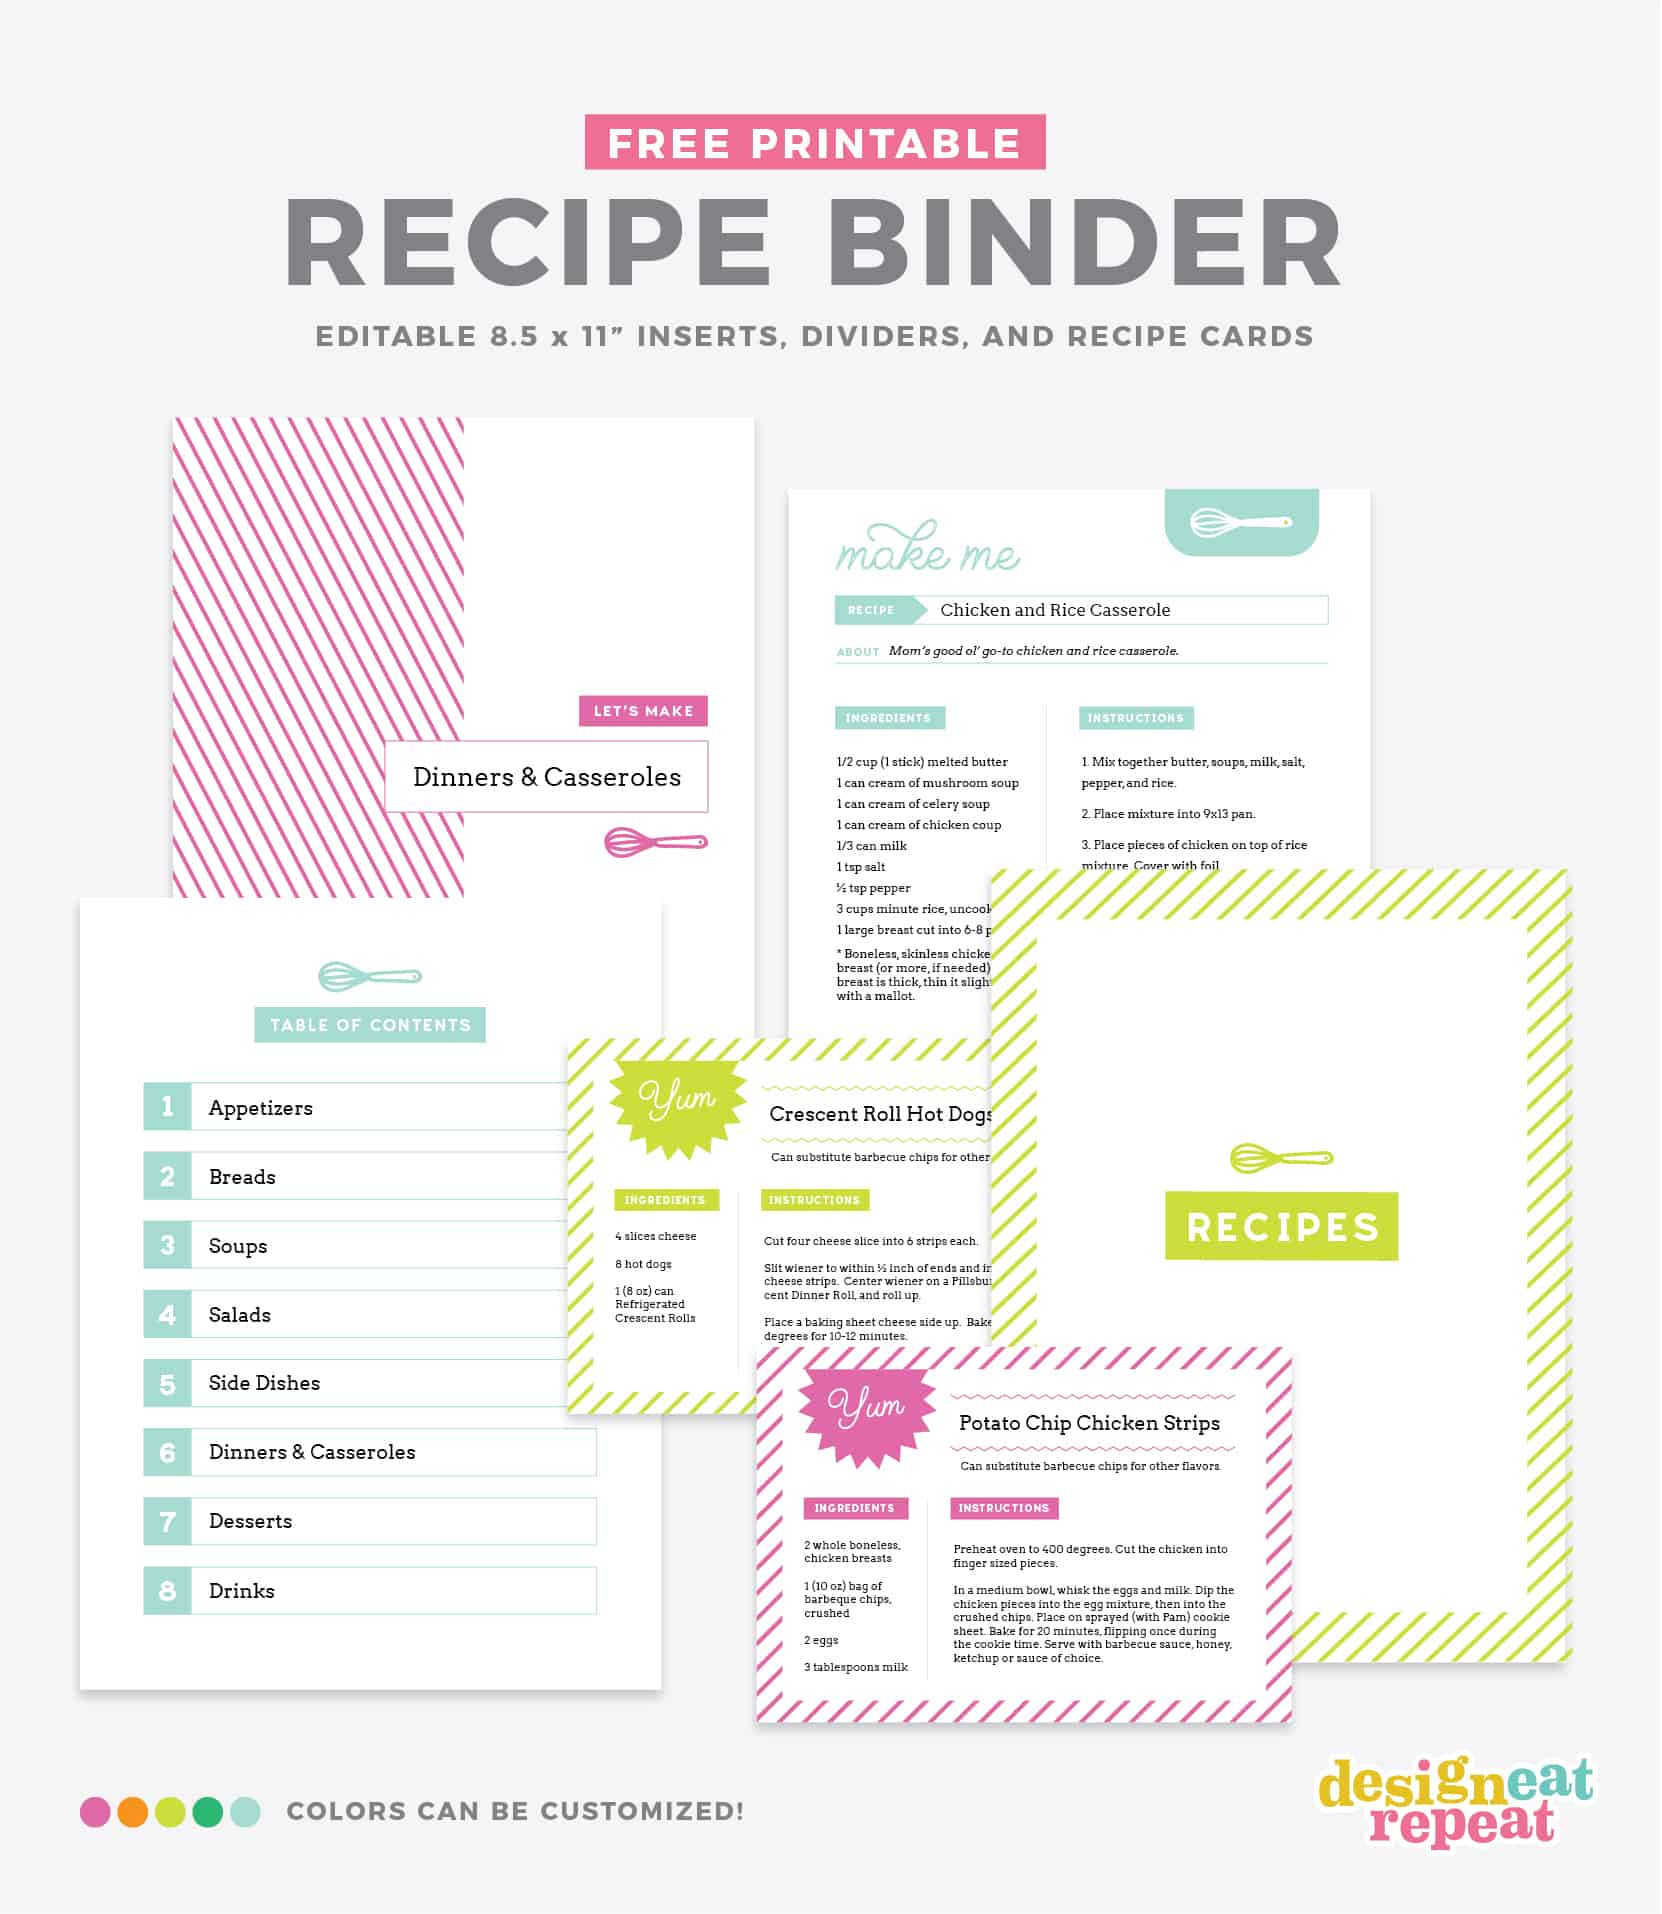 Diy Recipe Book (With Free Printable Recipe Binder Kit!) - Free Printable Recipes